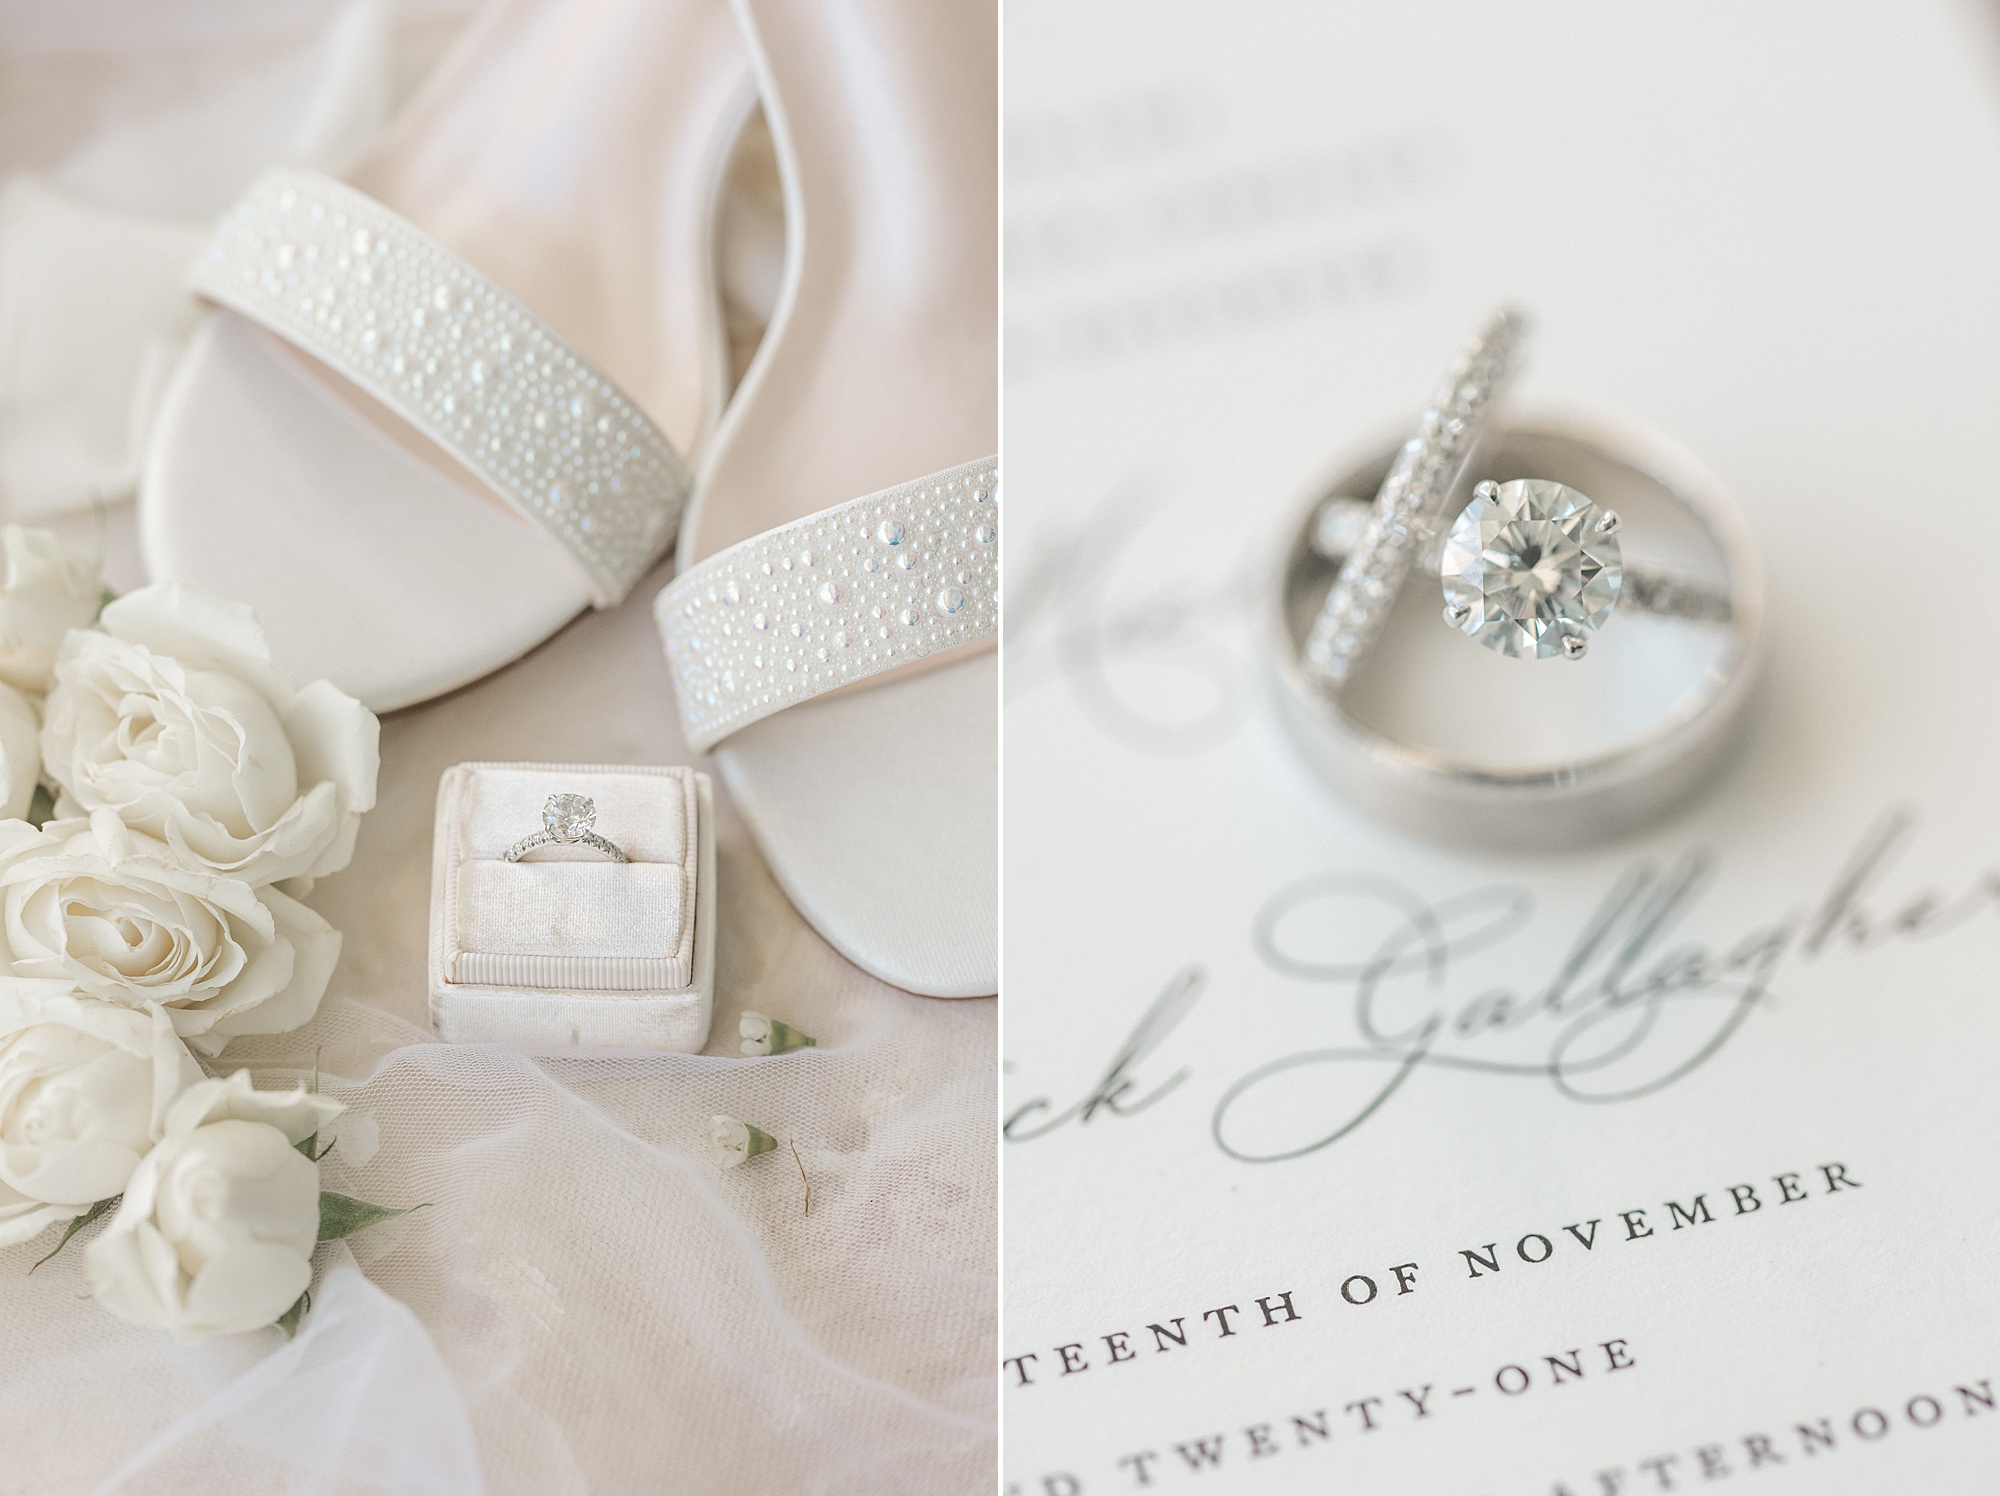 wedding invitations and wedding rings